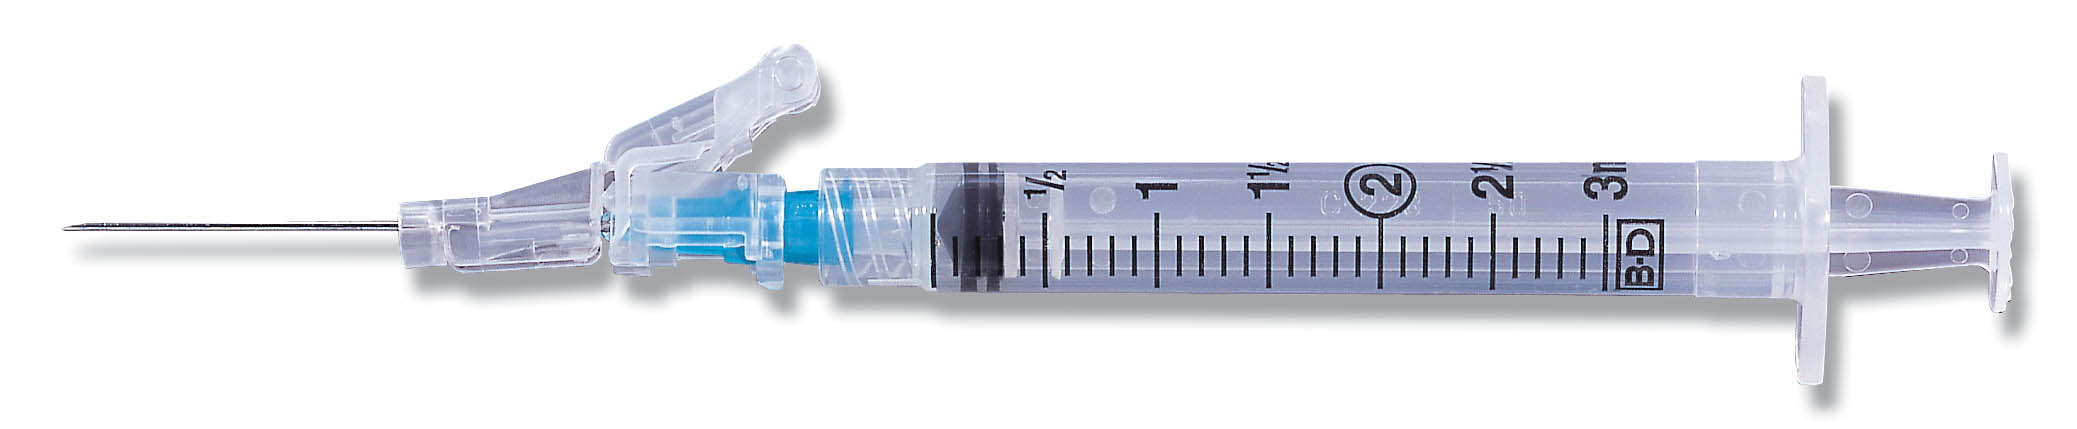 BD 3ml LuerLok Syringe with Hypodermic Needle, 25 G x 1